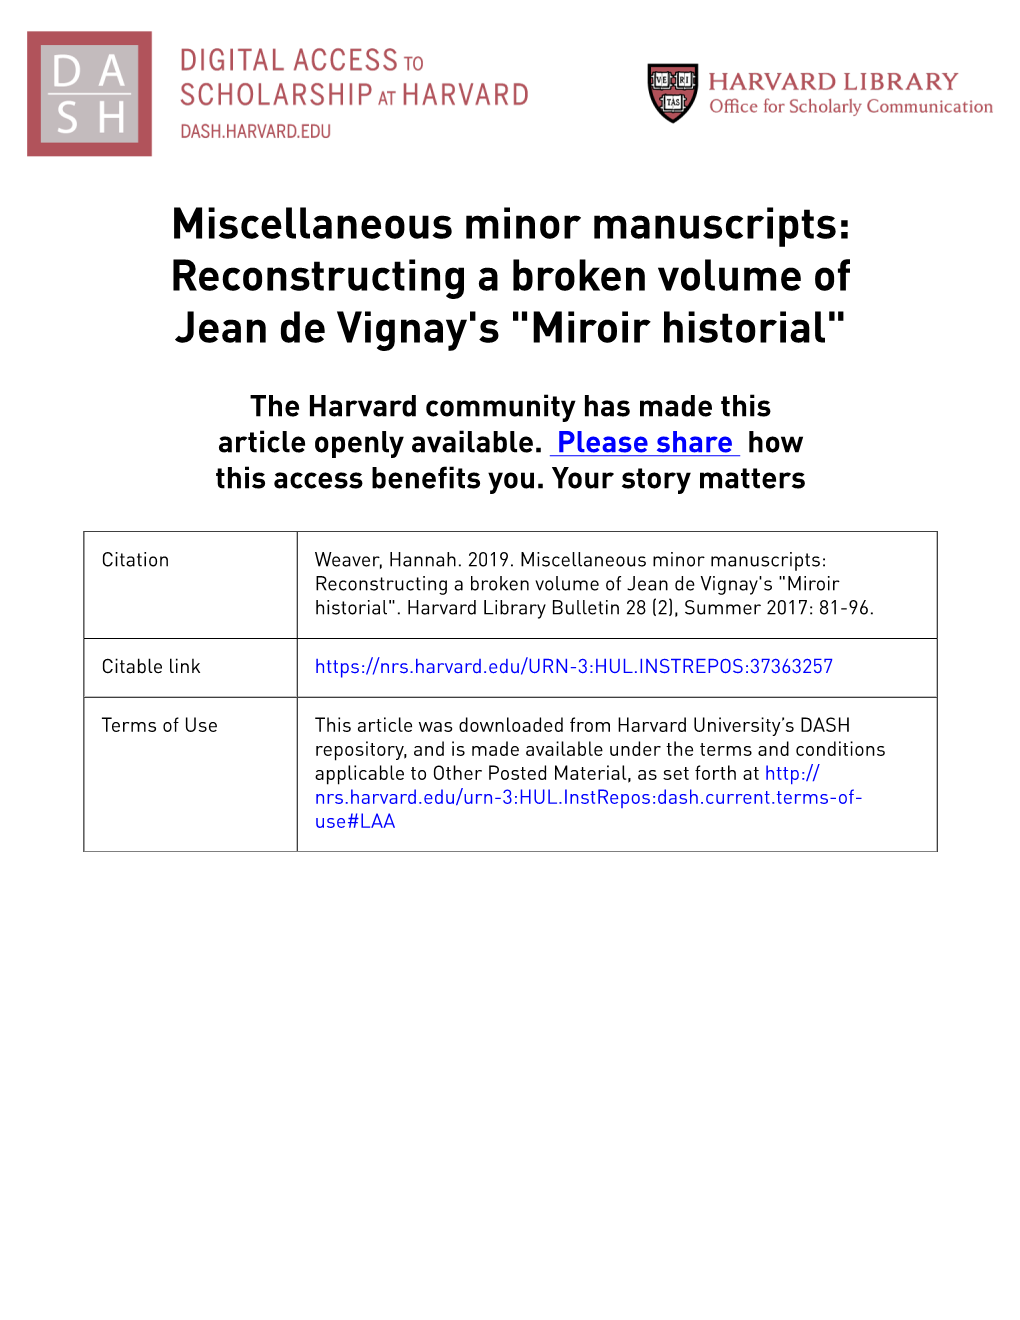 Reconstructing a Broken Volume of Jean De Vignay's "Miroir Historial"